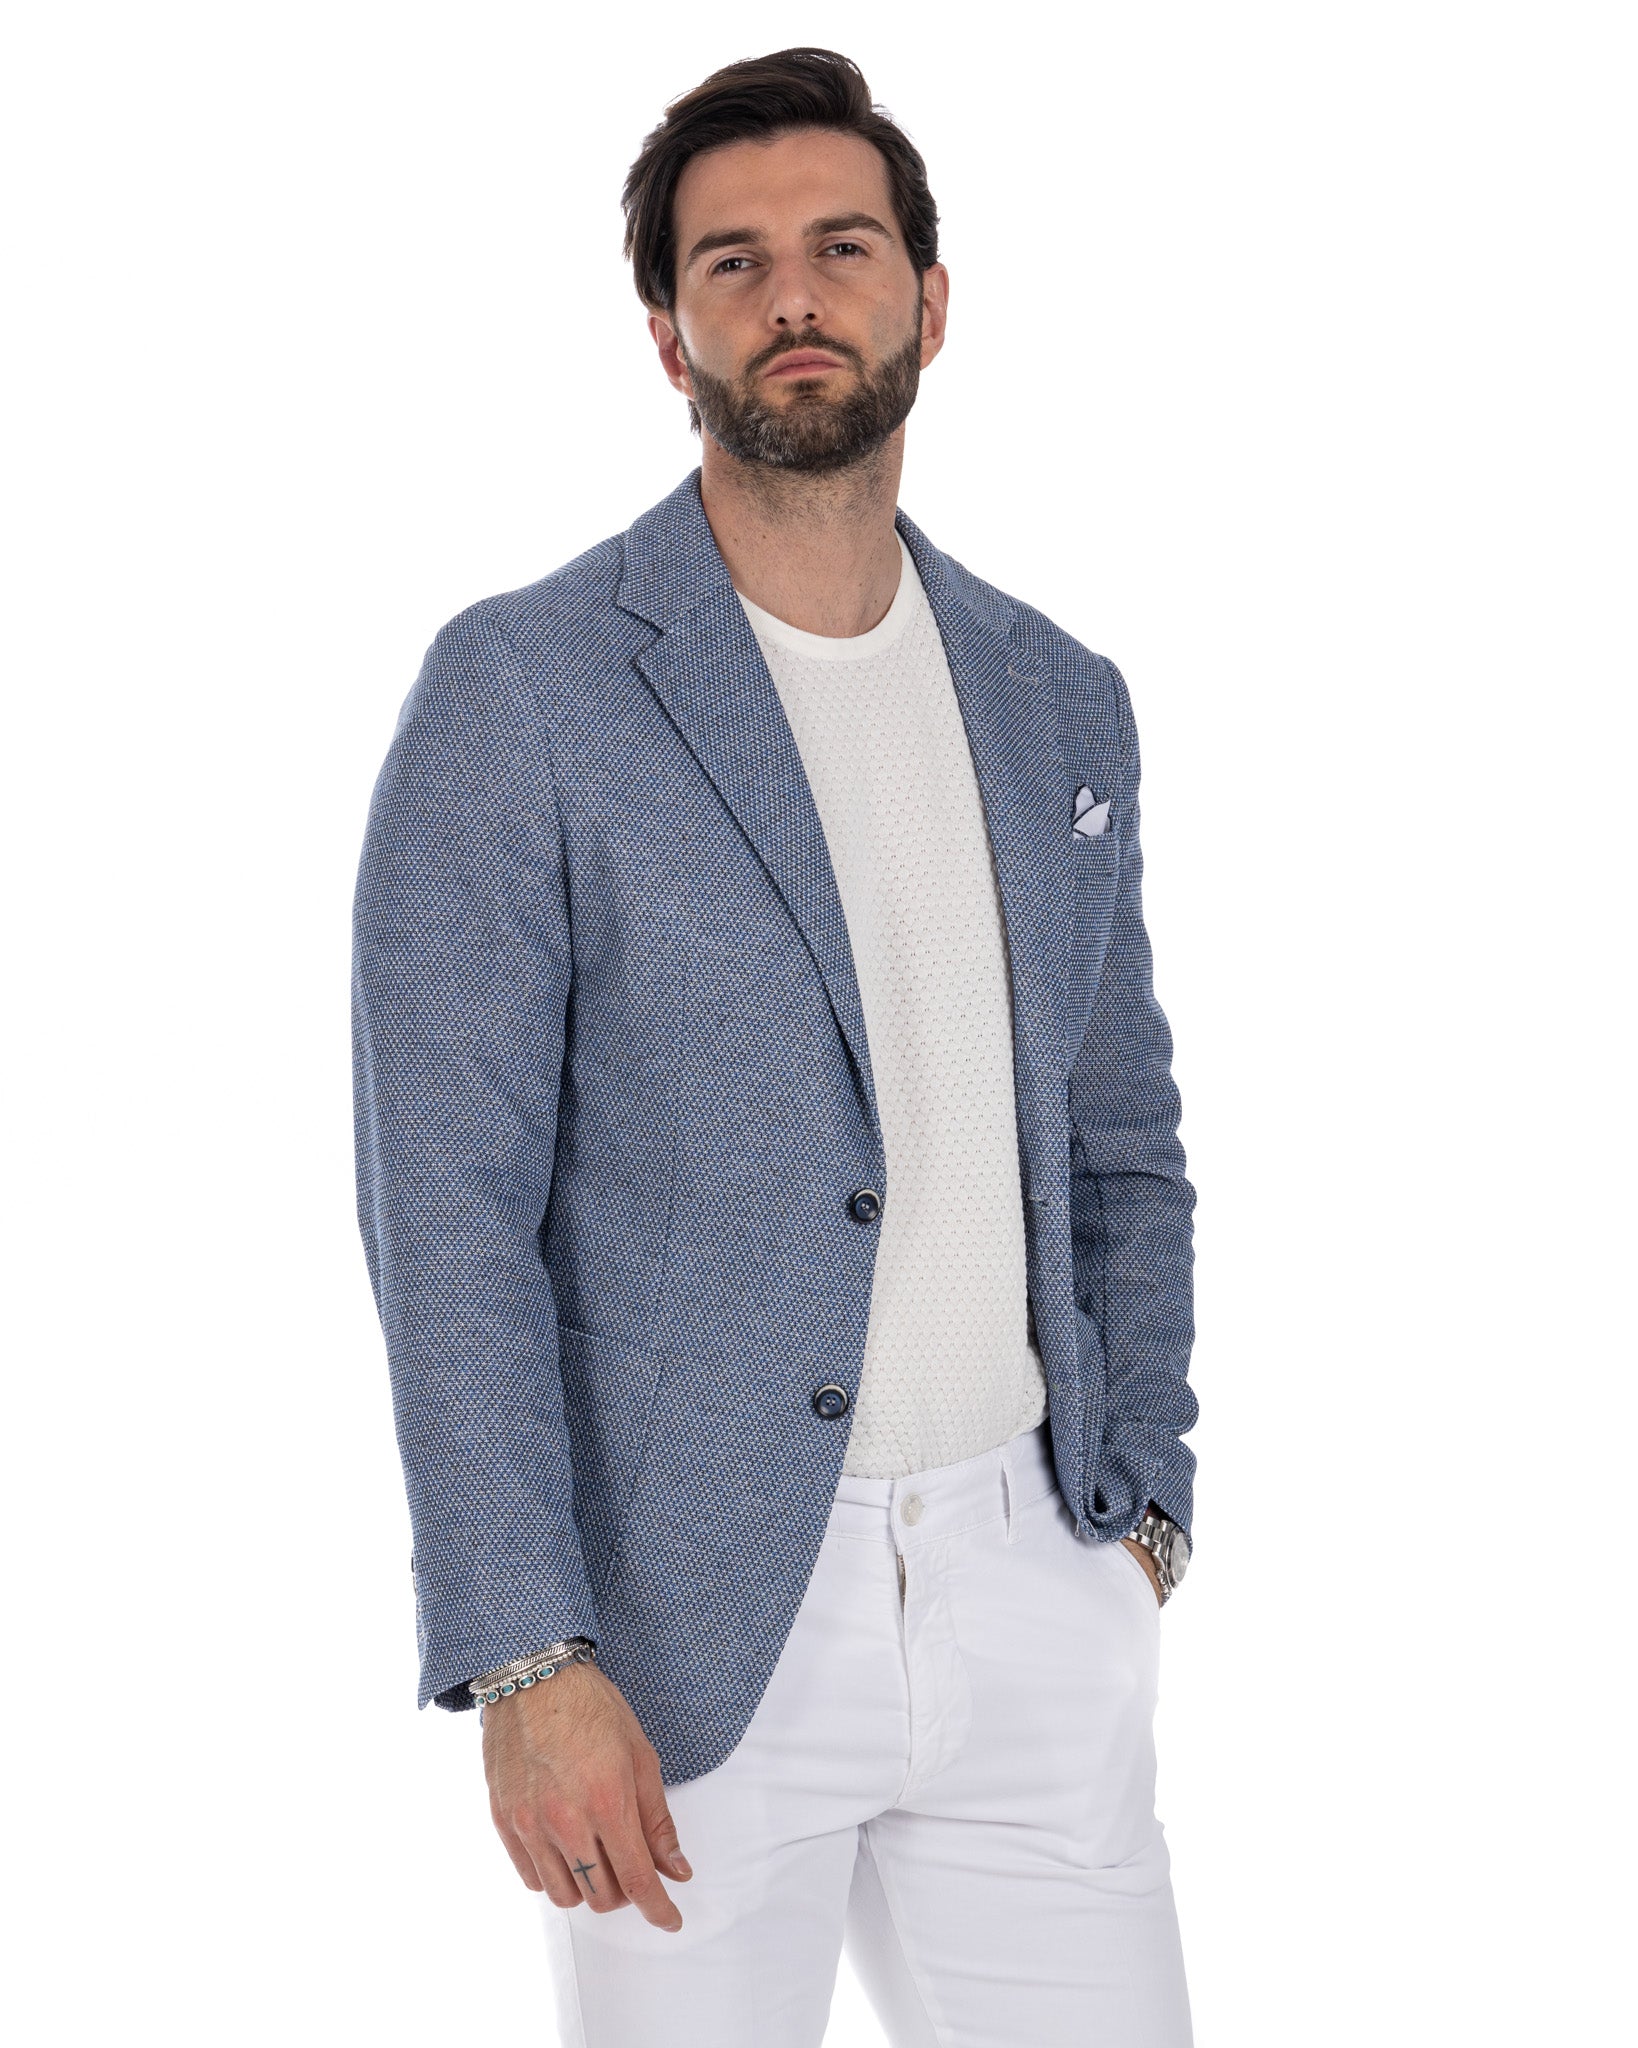 Veglie - gray rice grain single-breasted jacket